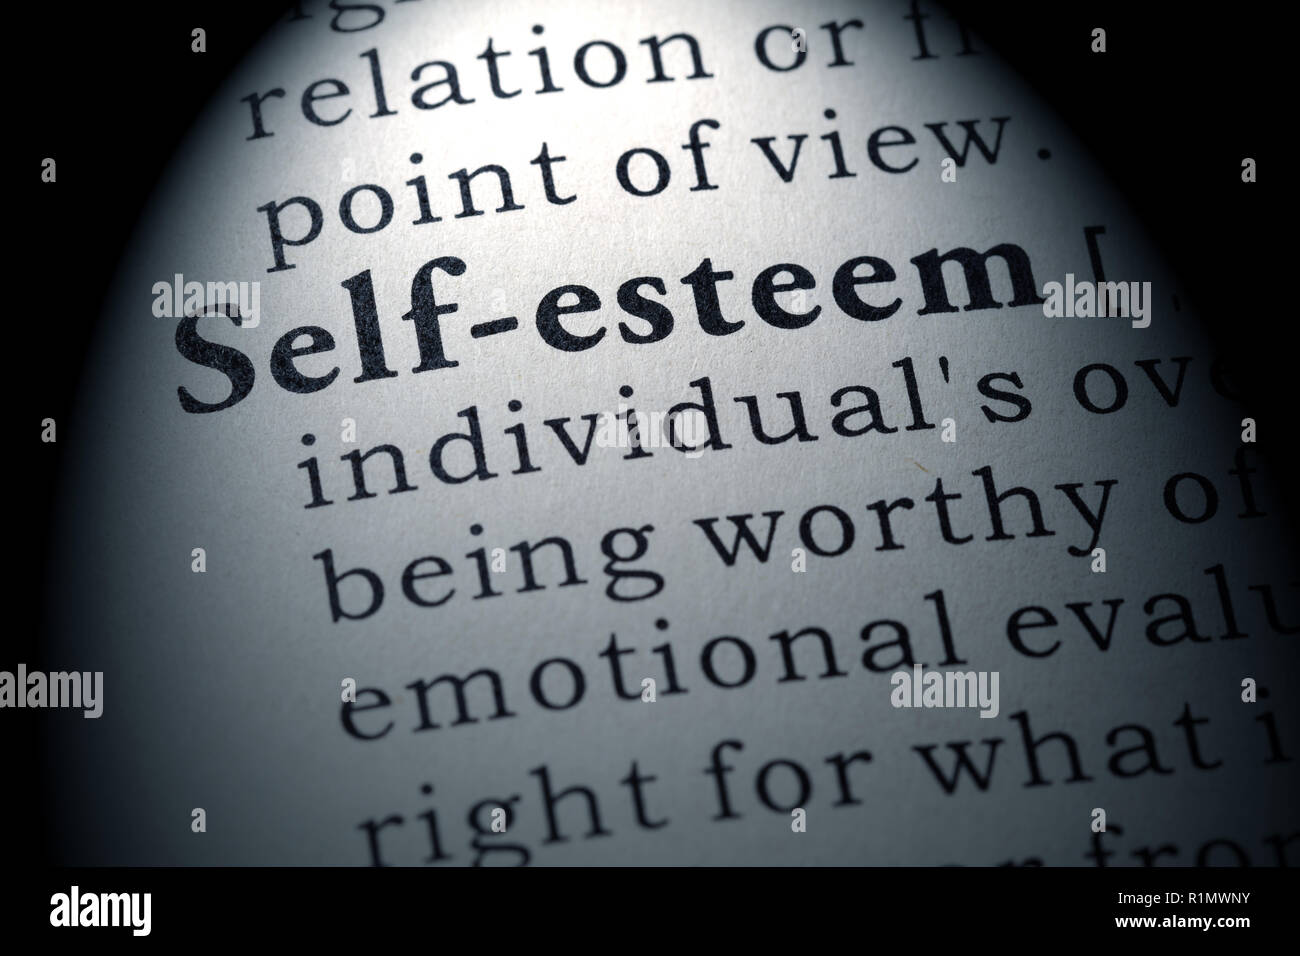 Fake Dictionary, Dictionary definition of the word self-esteem . including key descriptive words. Stock Photo